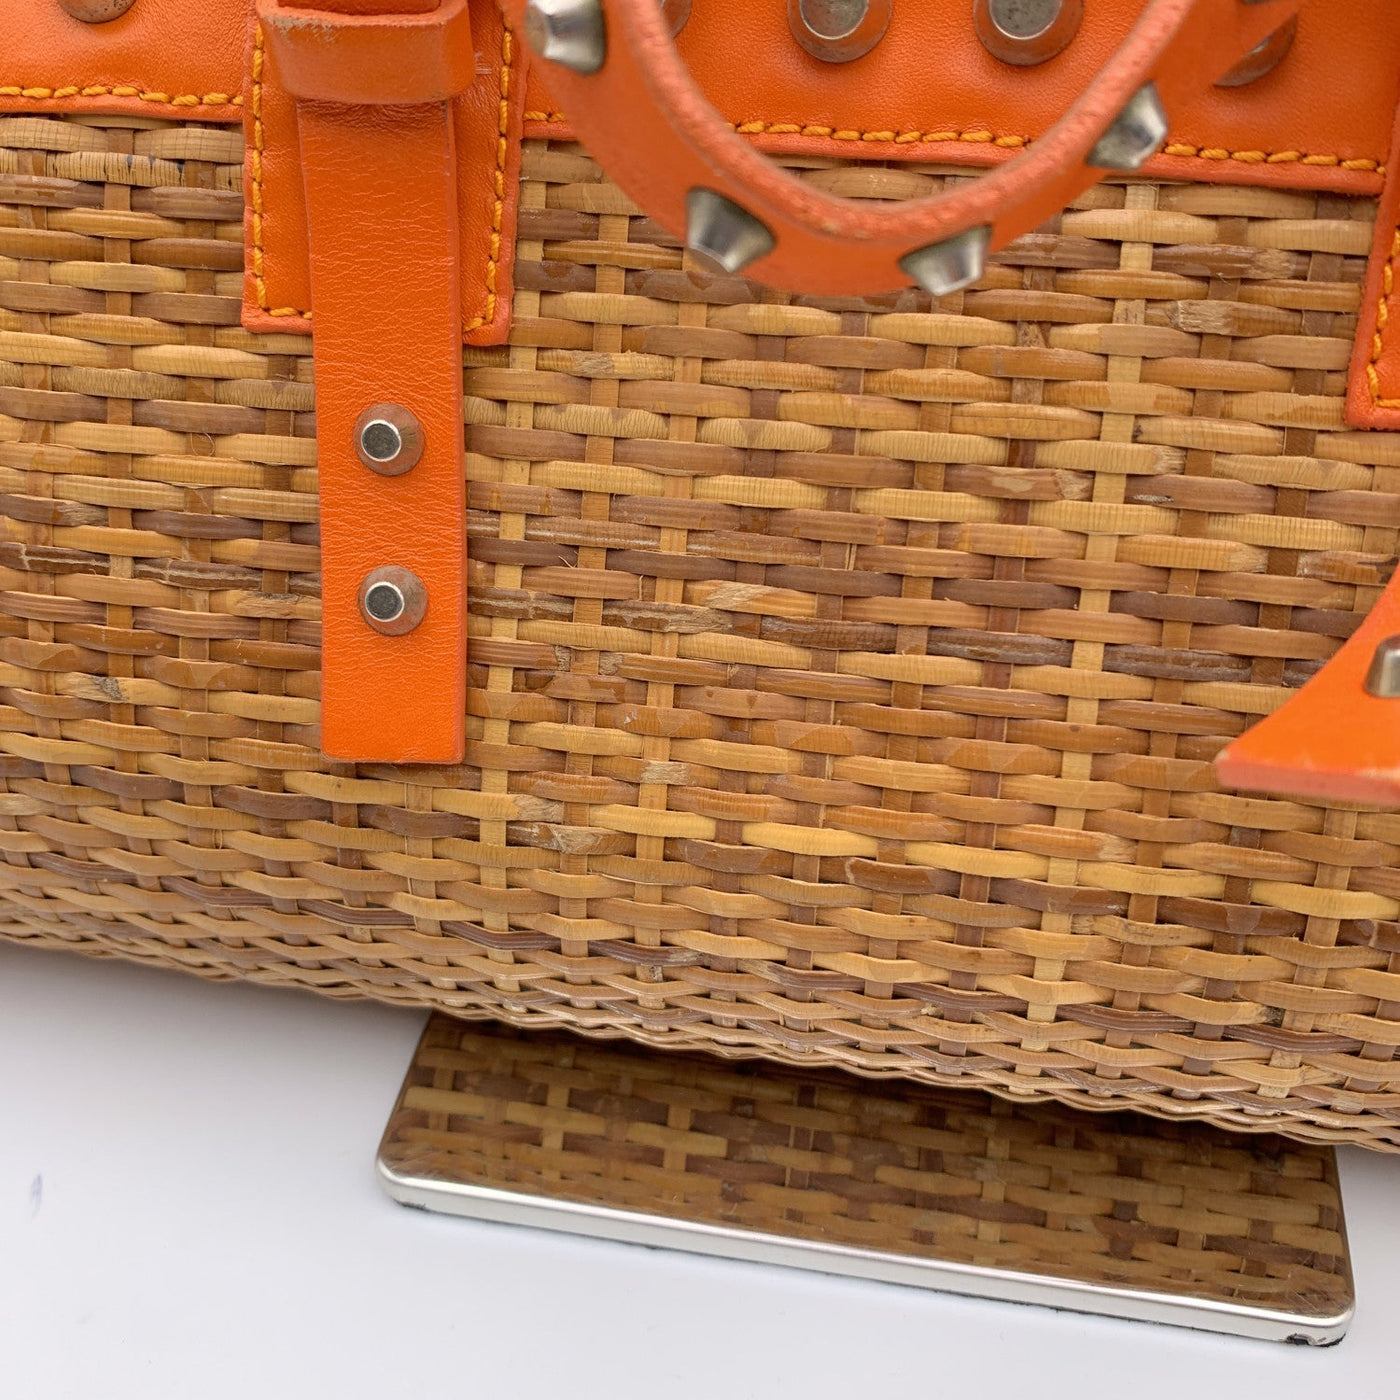 Fendi Wicker and Orange Leather Studded Tote Handbag Satchel